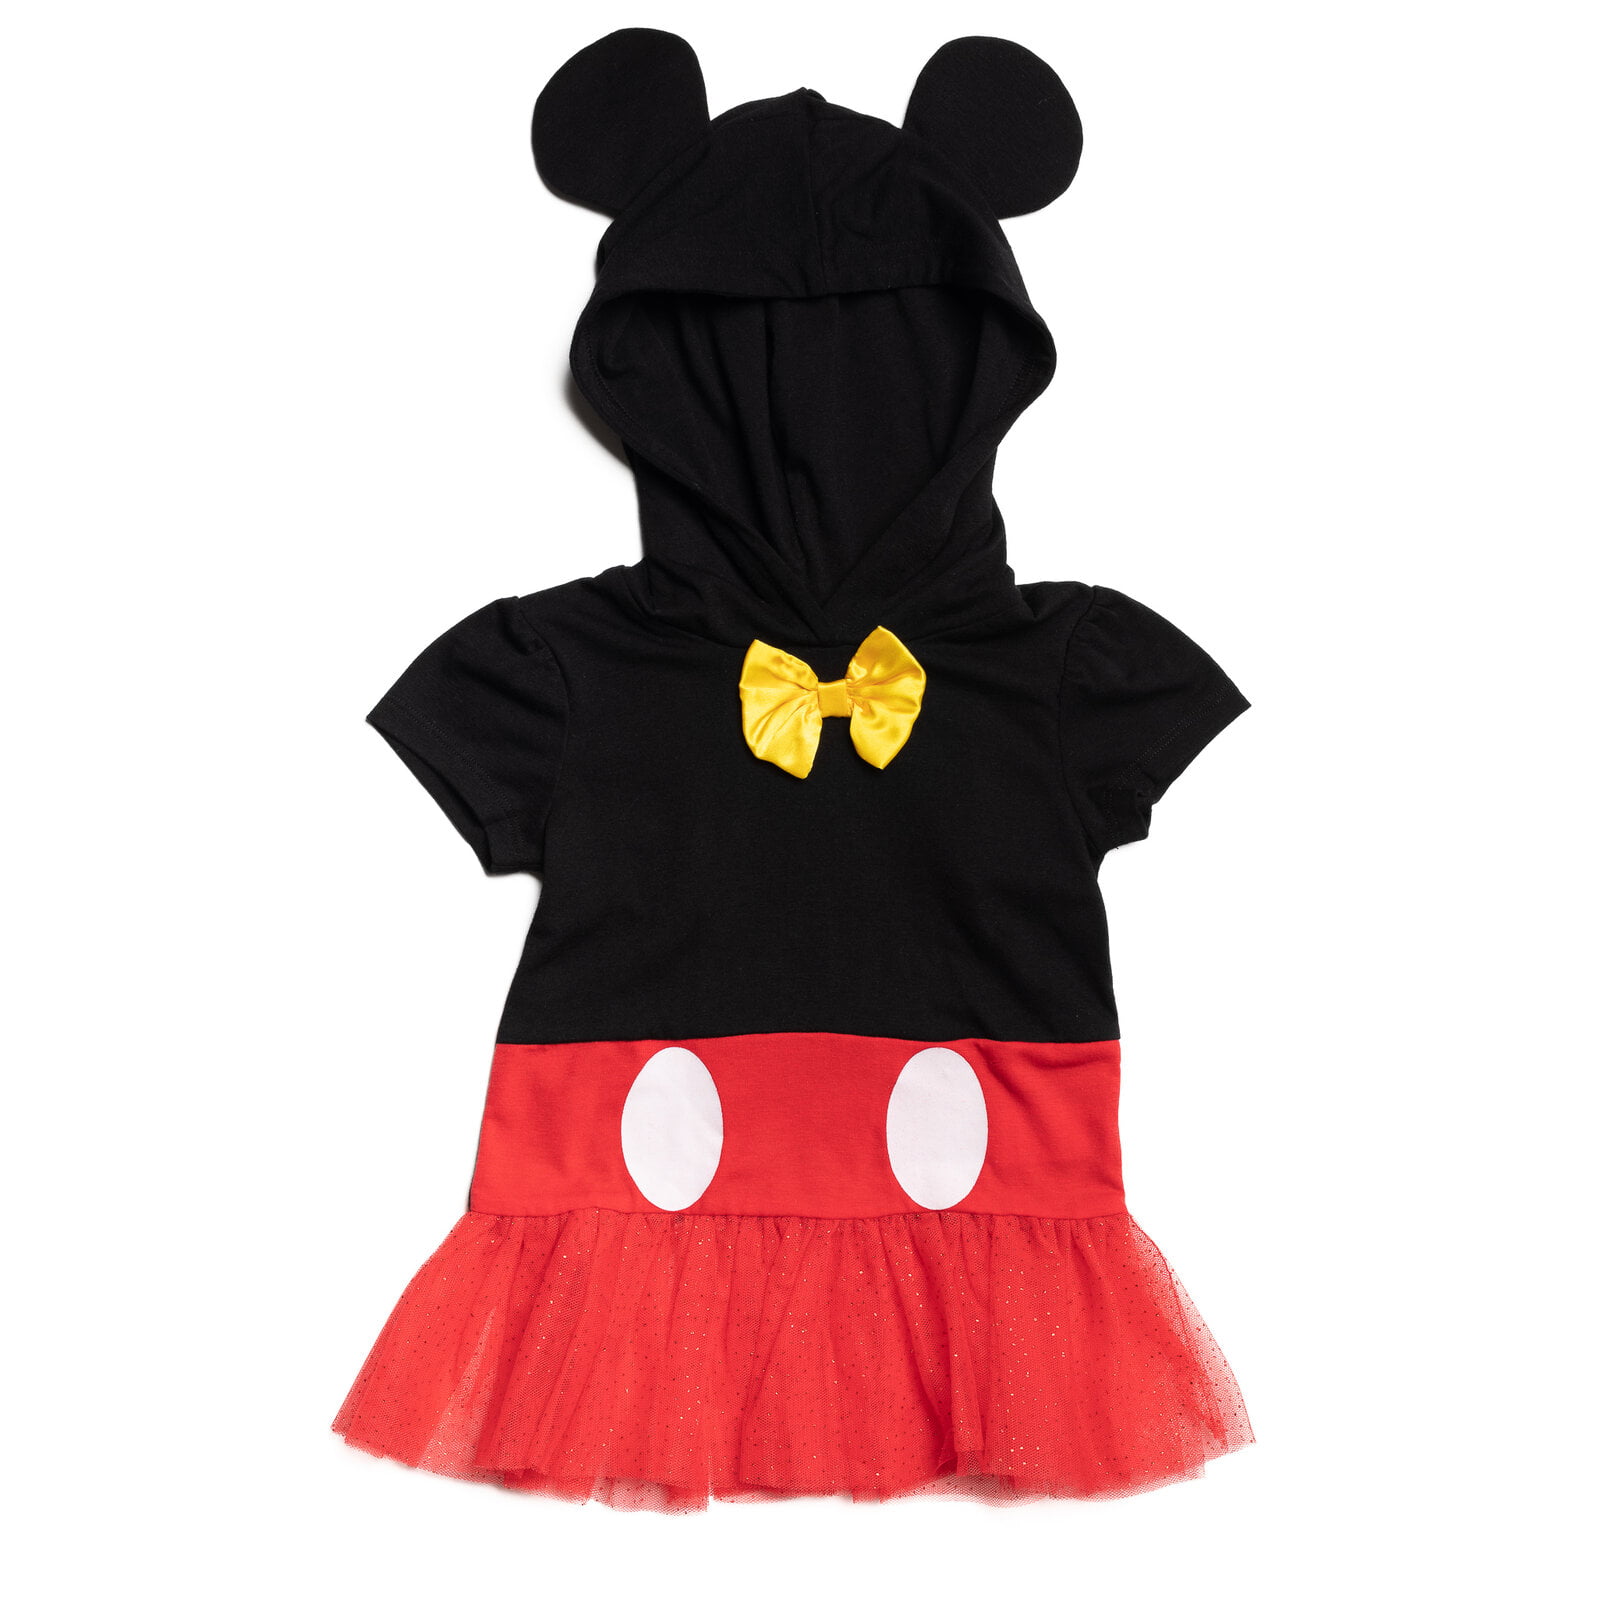 2T Mickey Mouse dress Toddler girls black red disney new | eBay